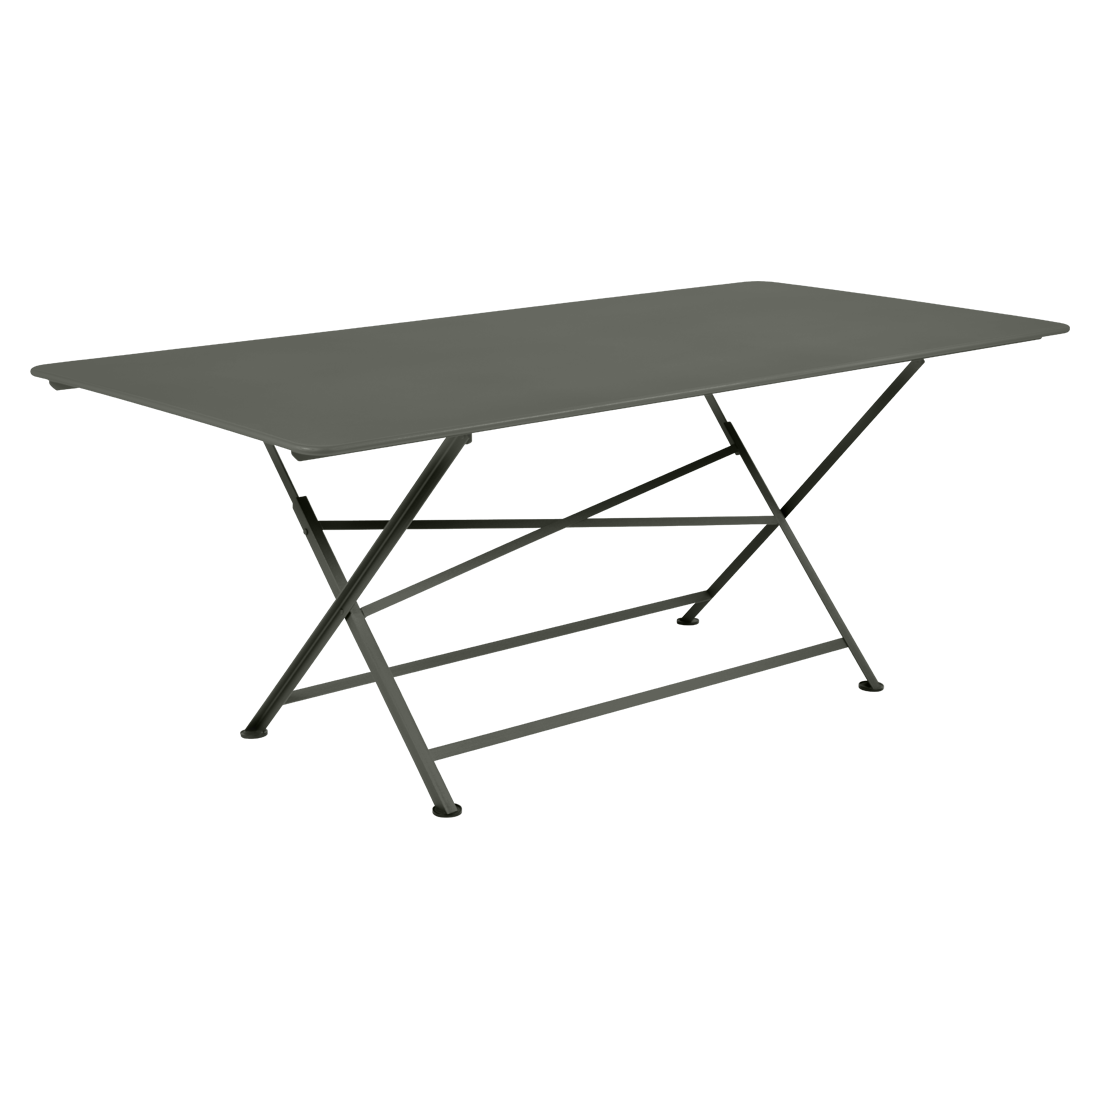 Cargo Rectangular Table 190 x 90